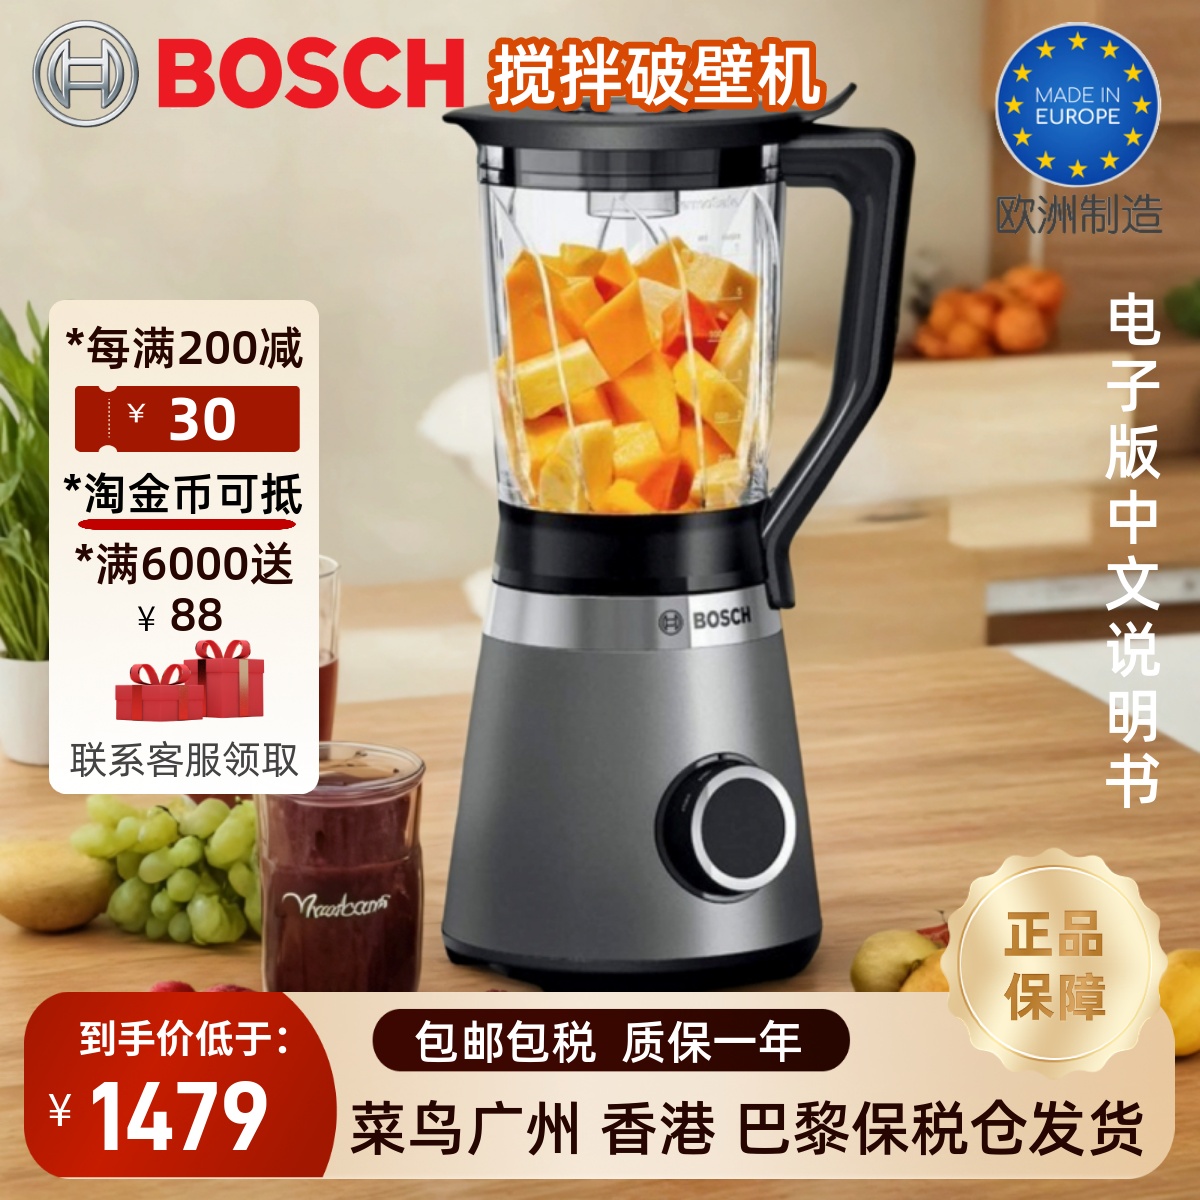 Bosch/博世德国进口破壁机多功能辅食搅拌果汁豆浆碎冰料理机家用